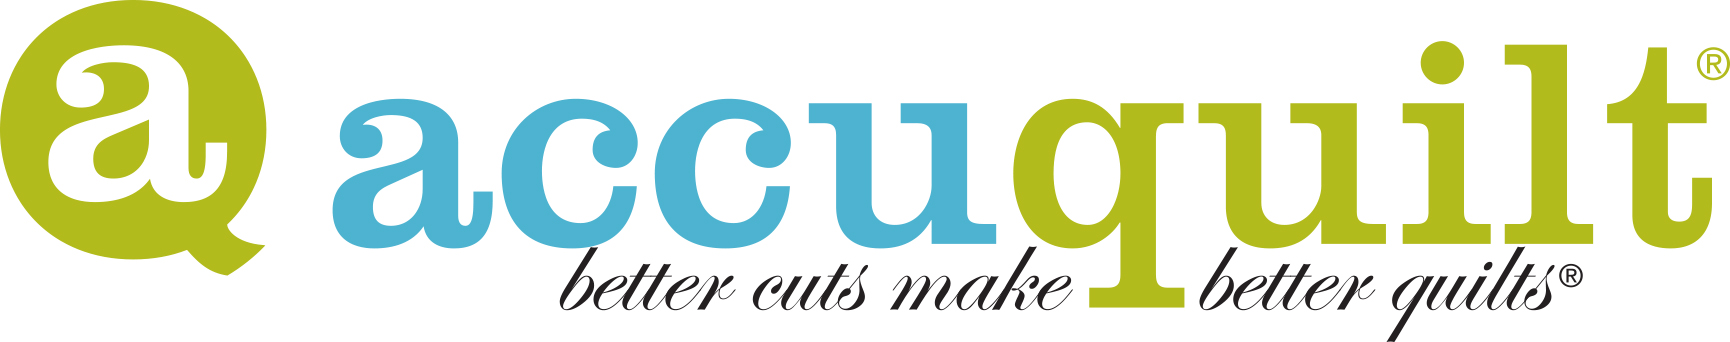 AccuQuilt_logo-4c (1).jpg